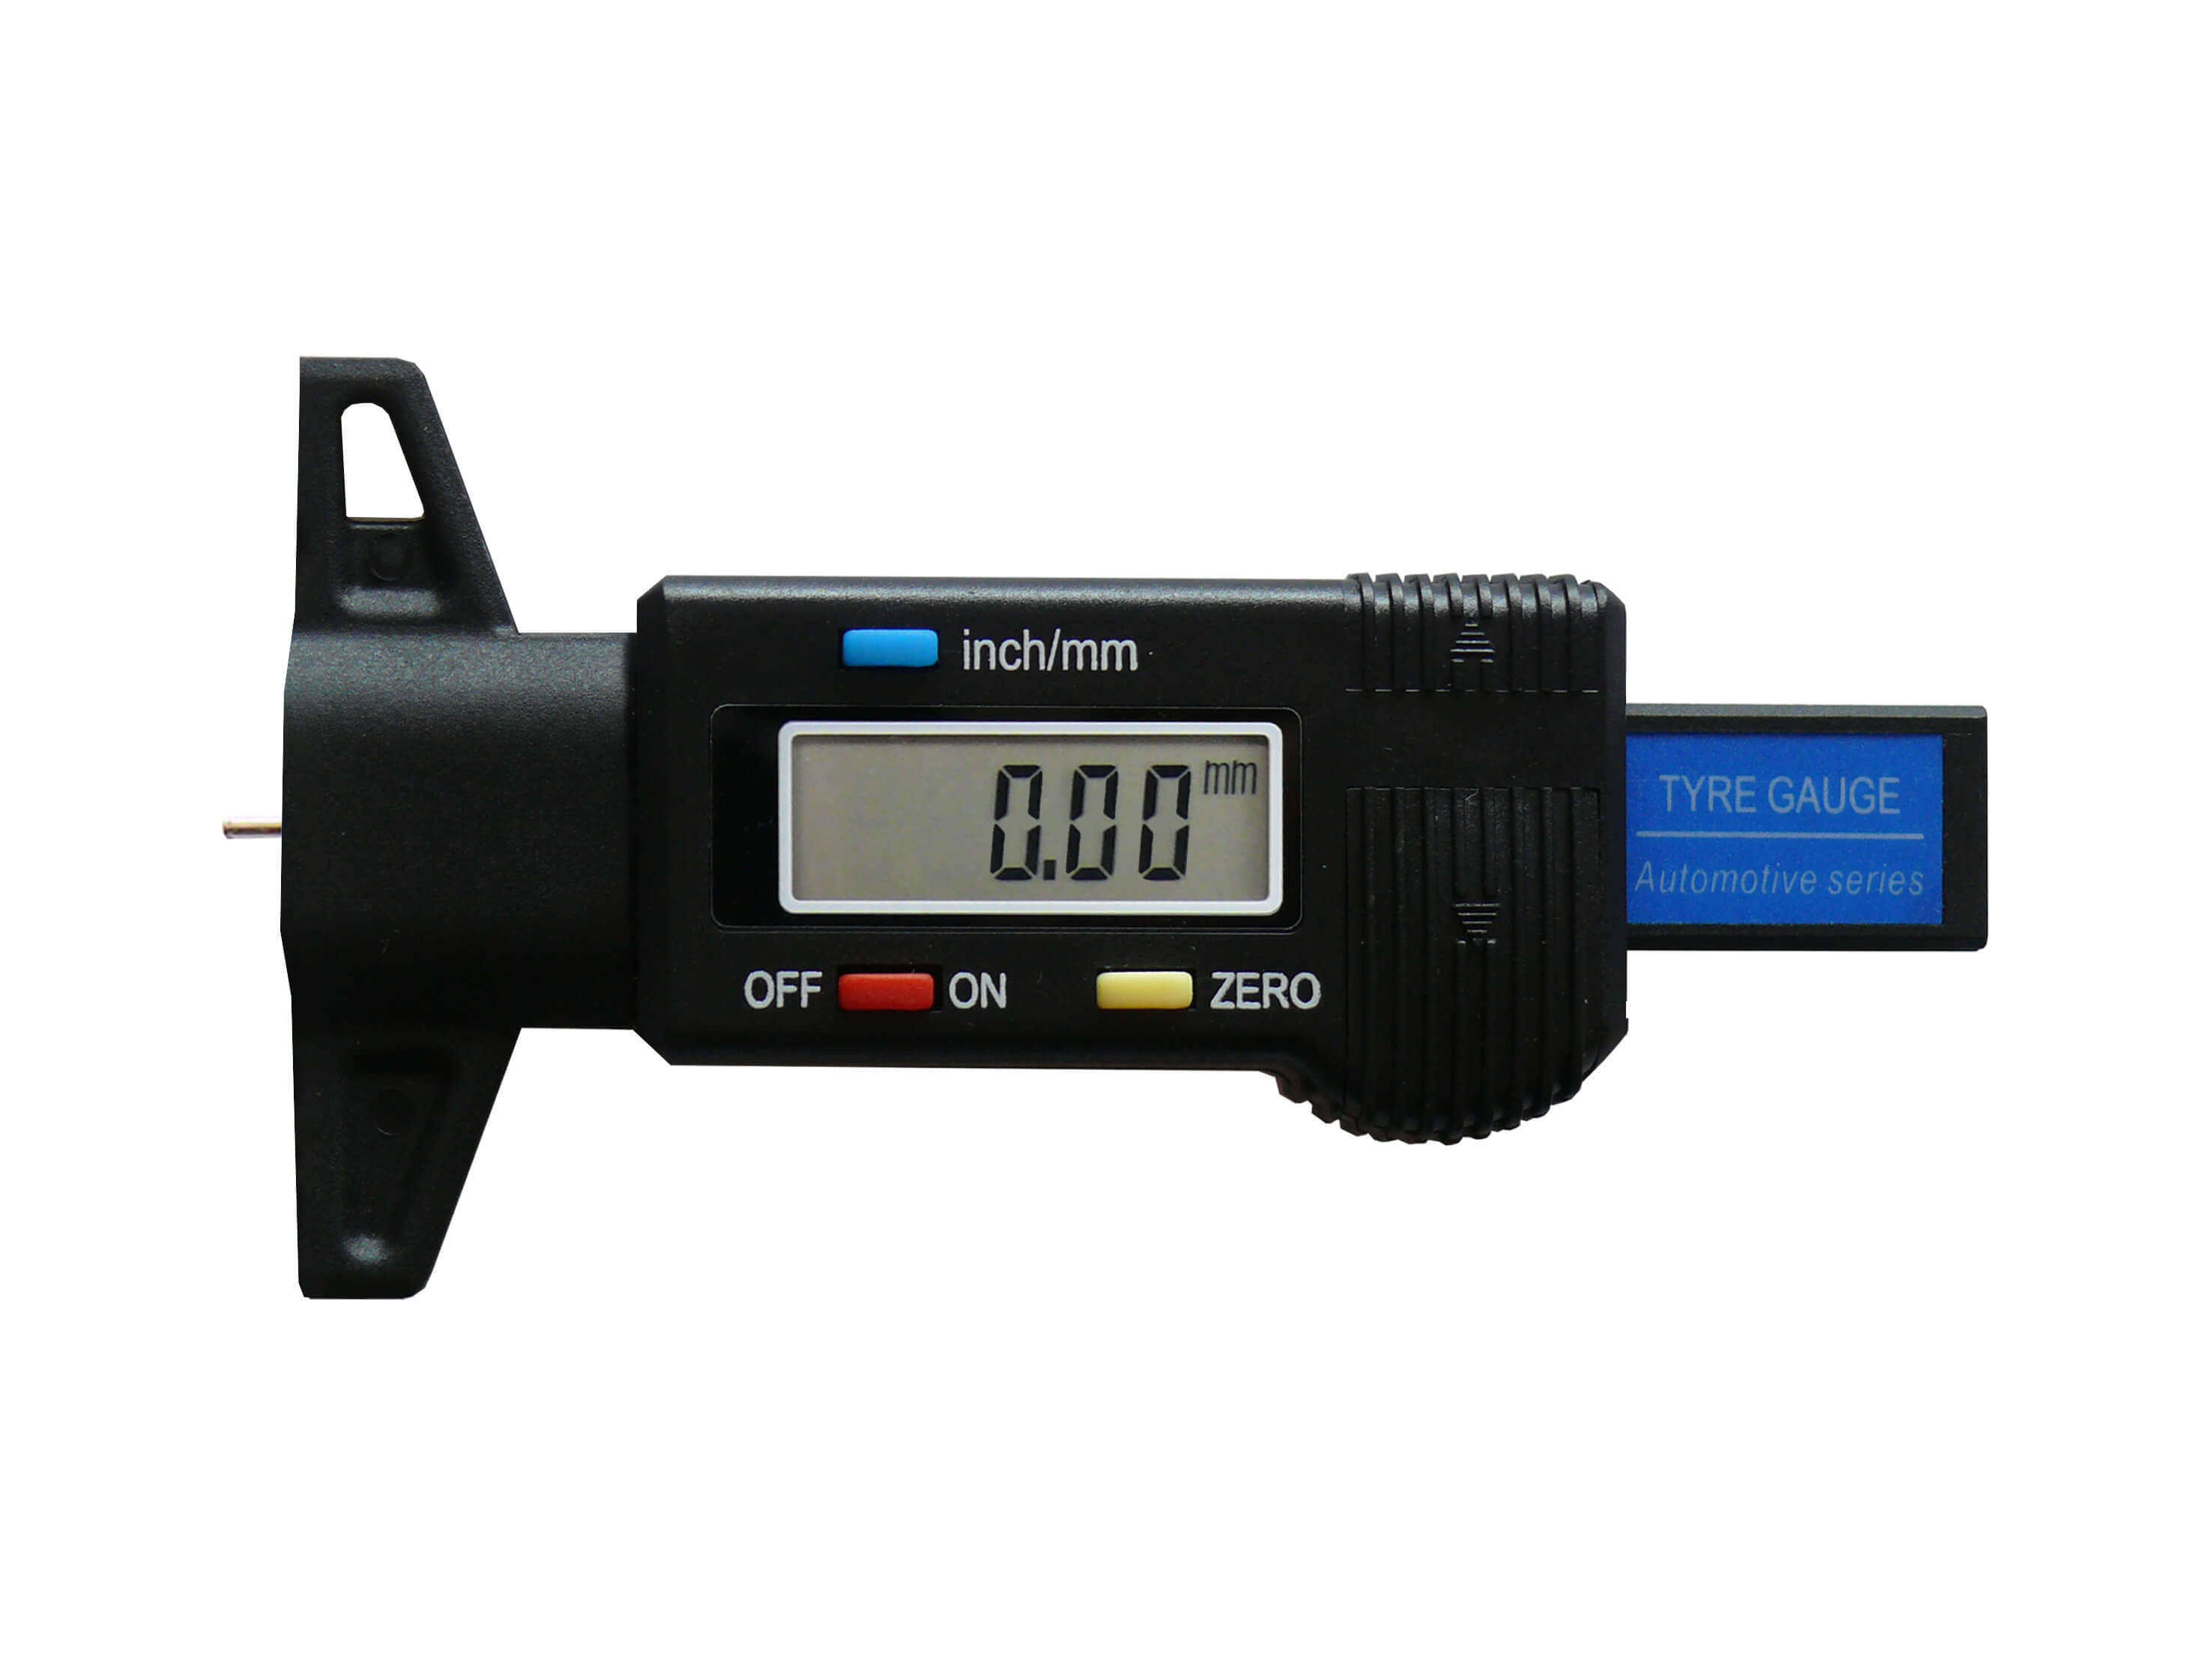 Reifen-Tiefenmesser Auto LCD Digital Reifen Profil Tread Checker Tester Metric/Zoll 0-25.4mm schwarz Reifenprofiltiefenmesser Profiltiefenmesser Reifen Tread Gauge 